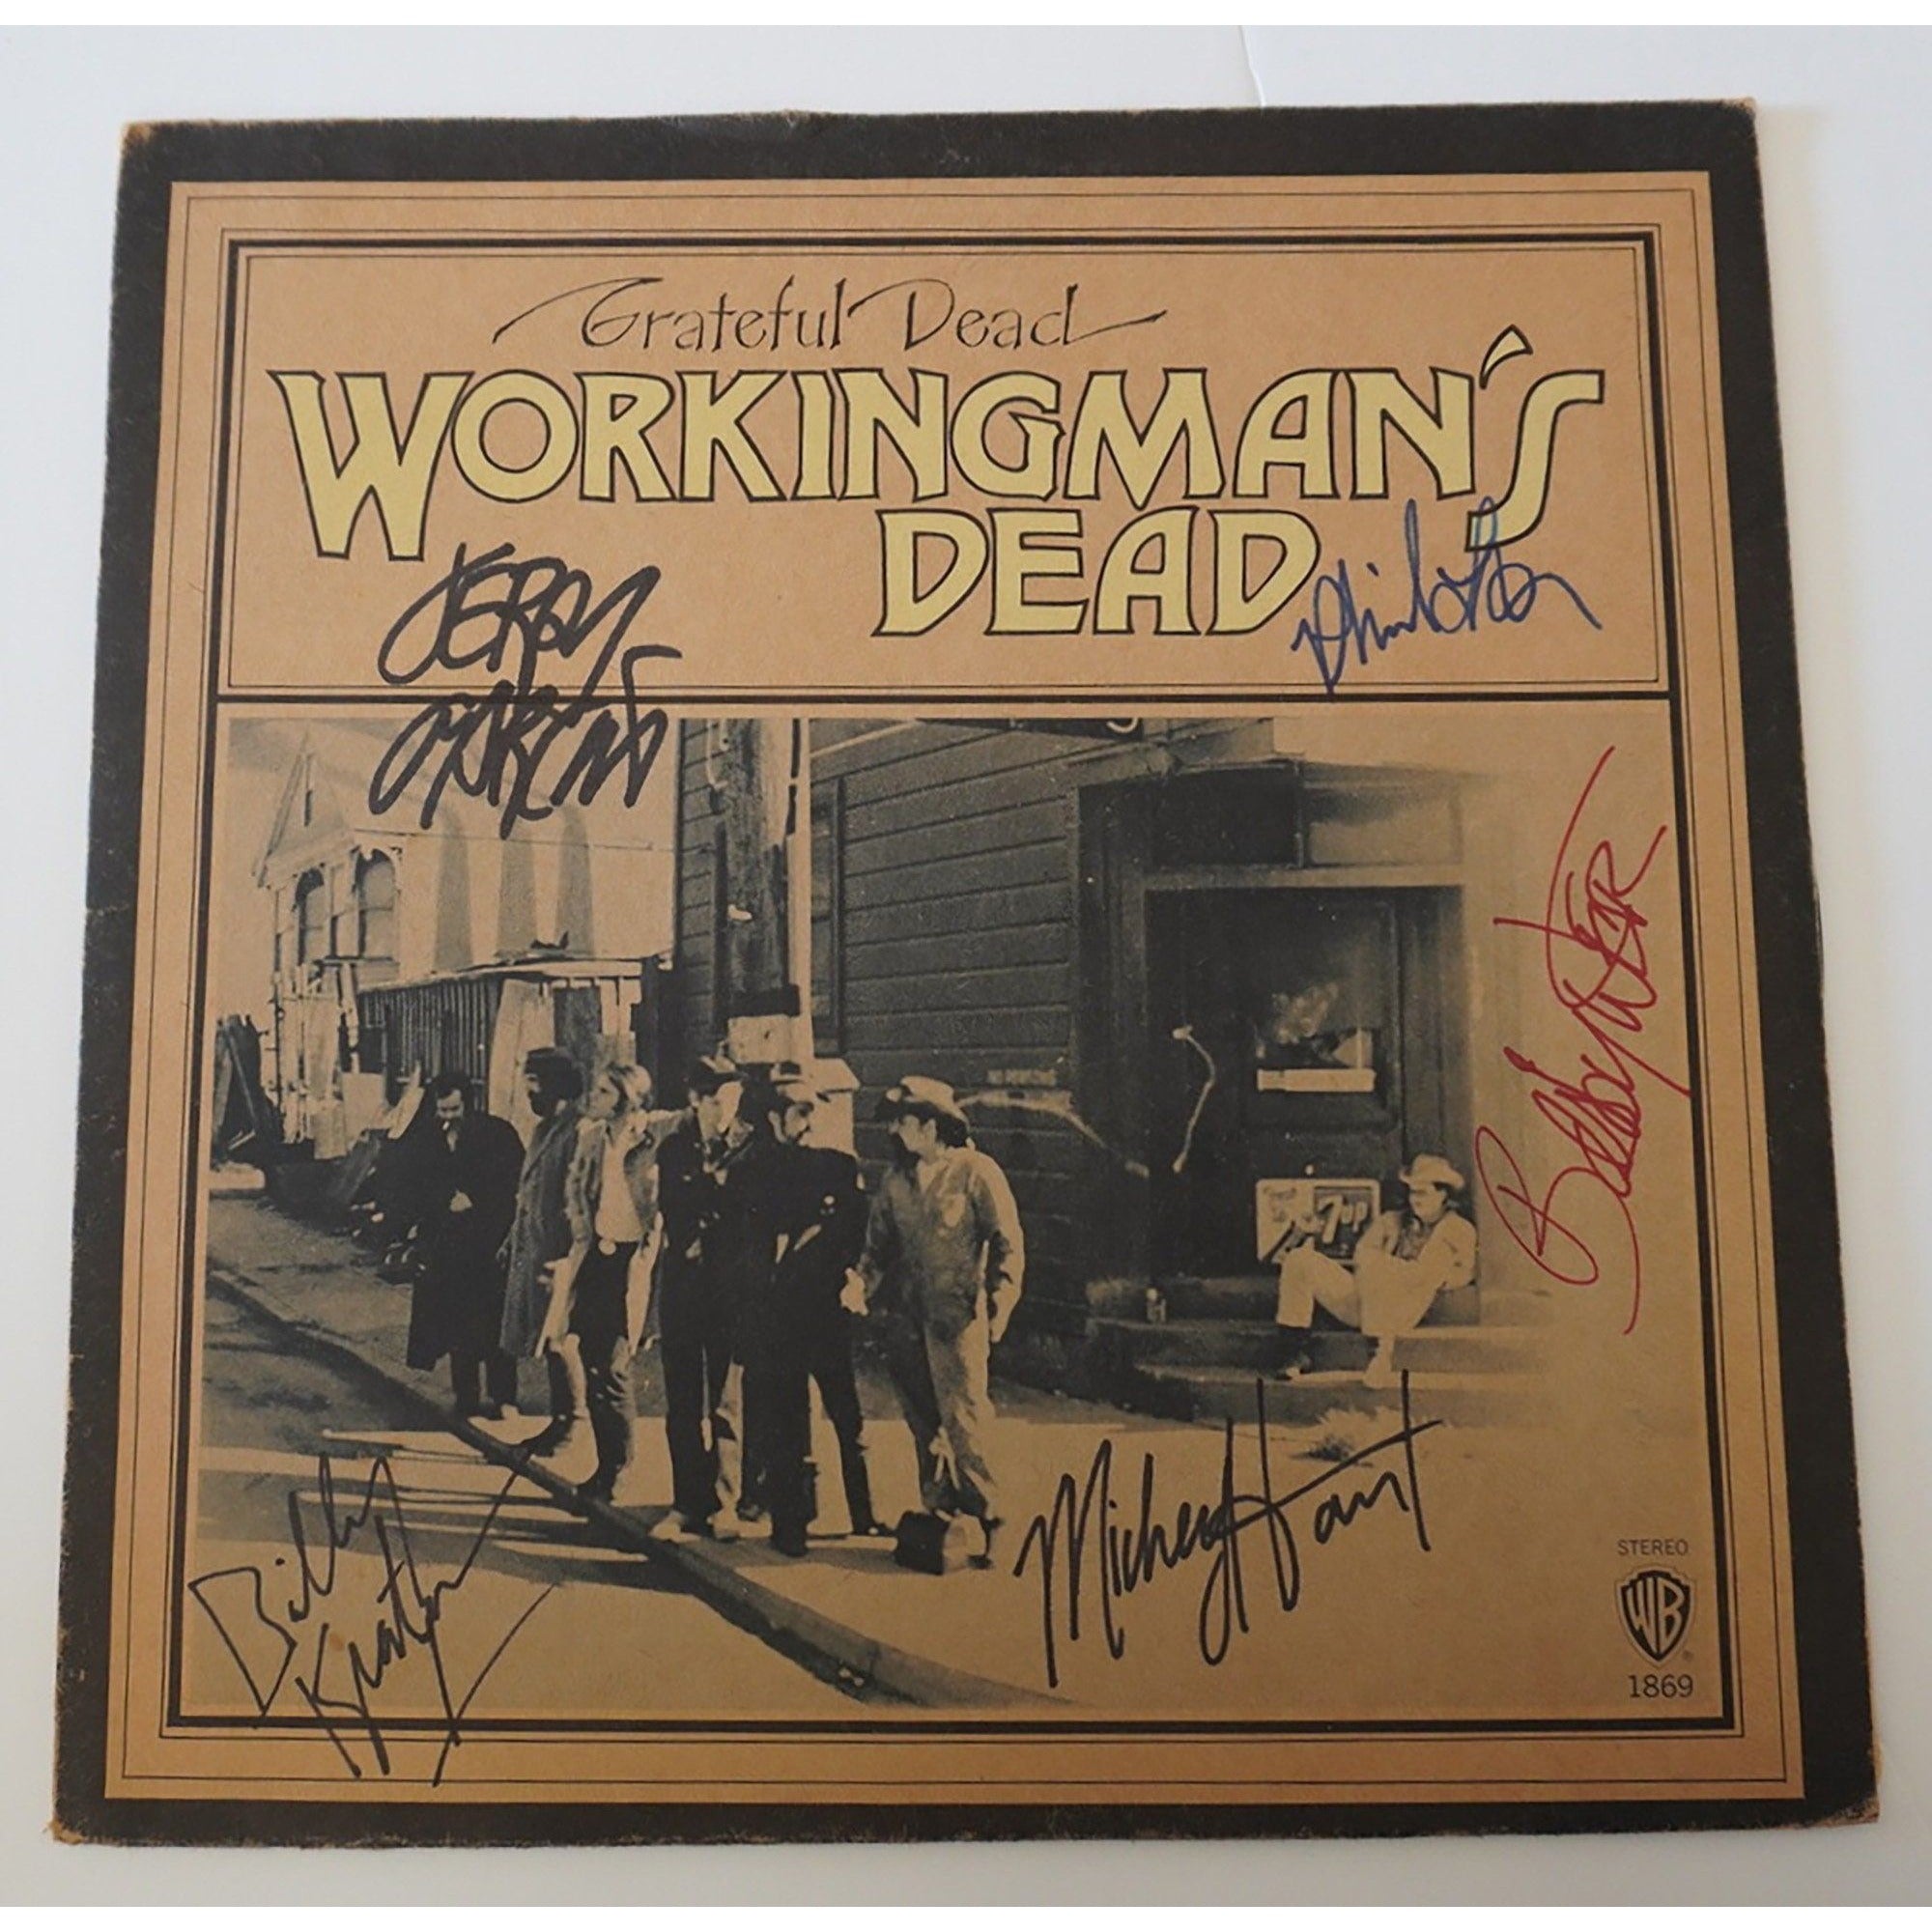 Grateful Dead Workingman's Dead LP signed with proof